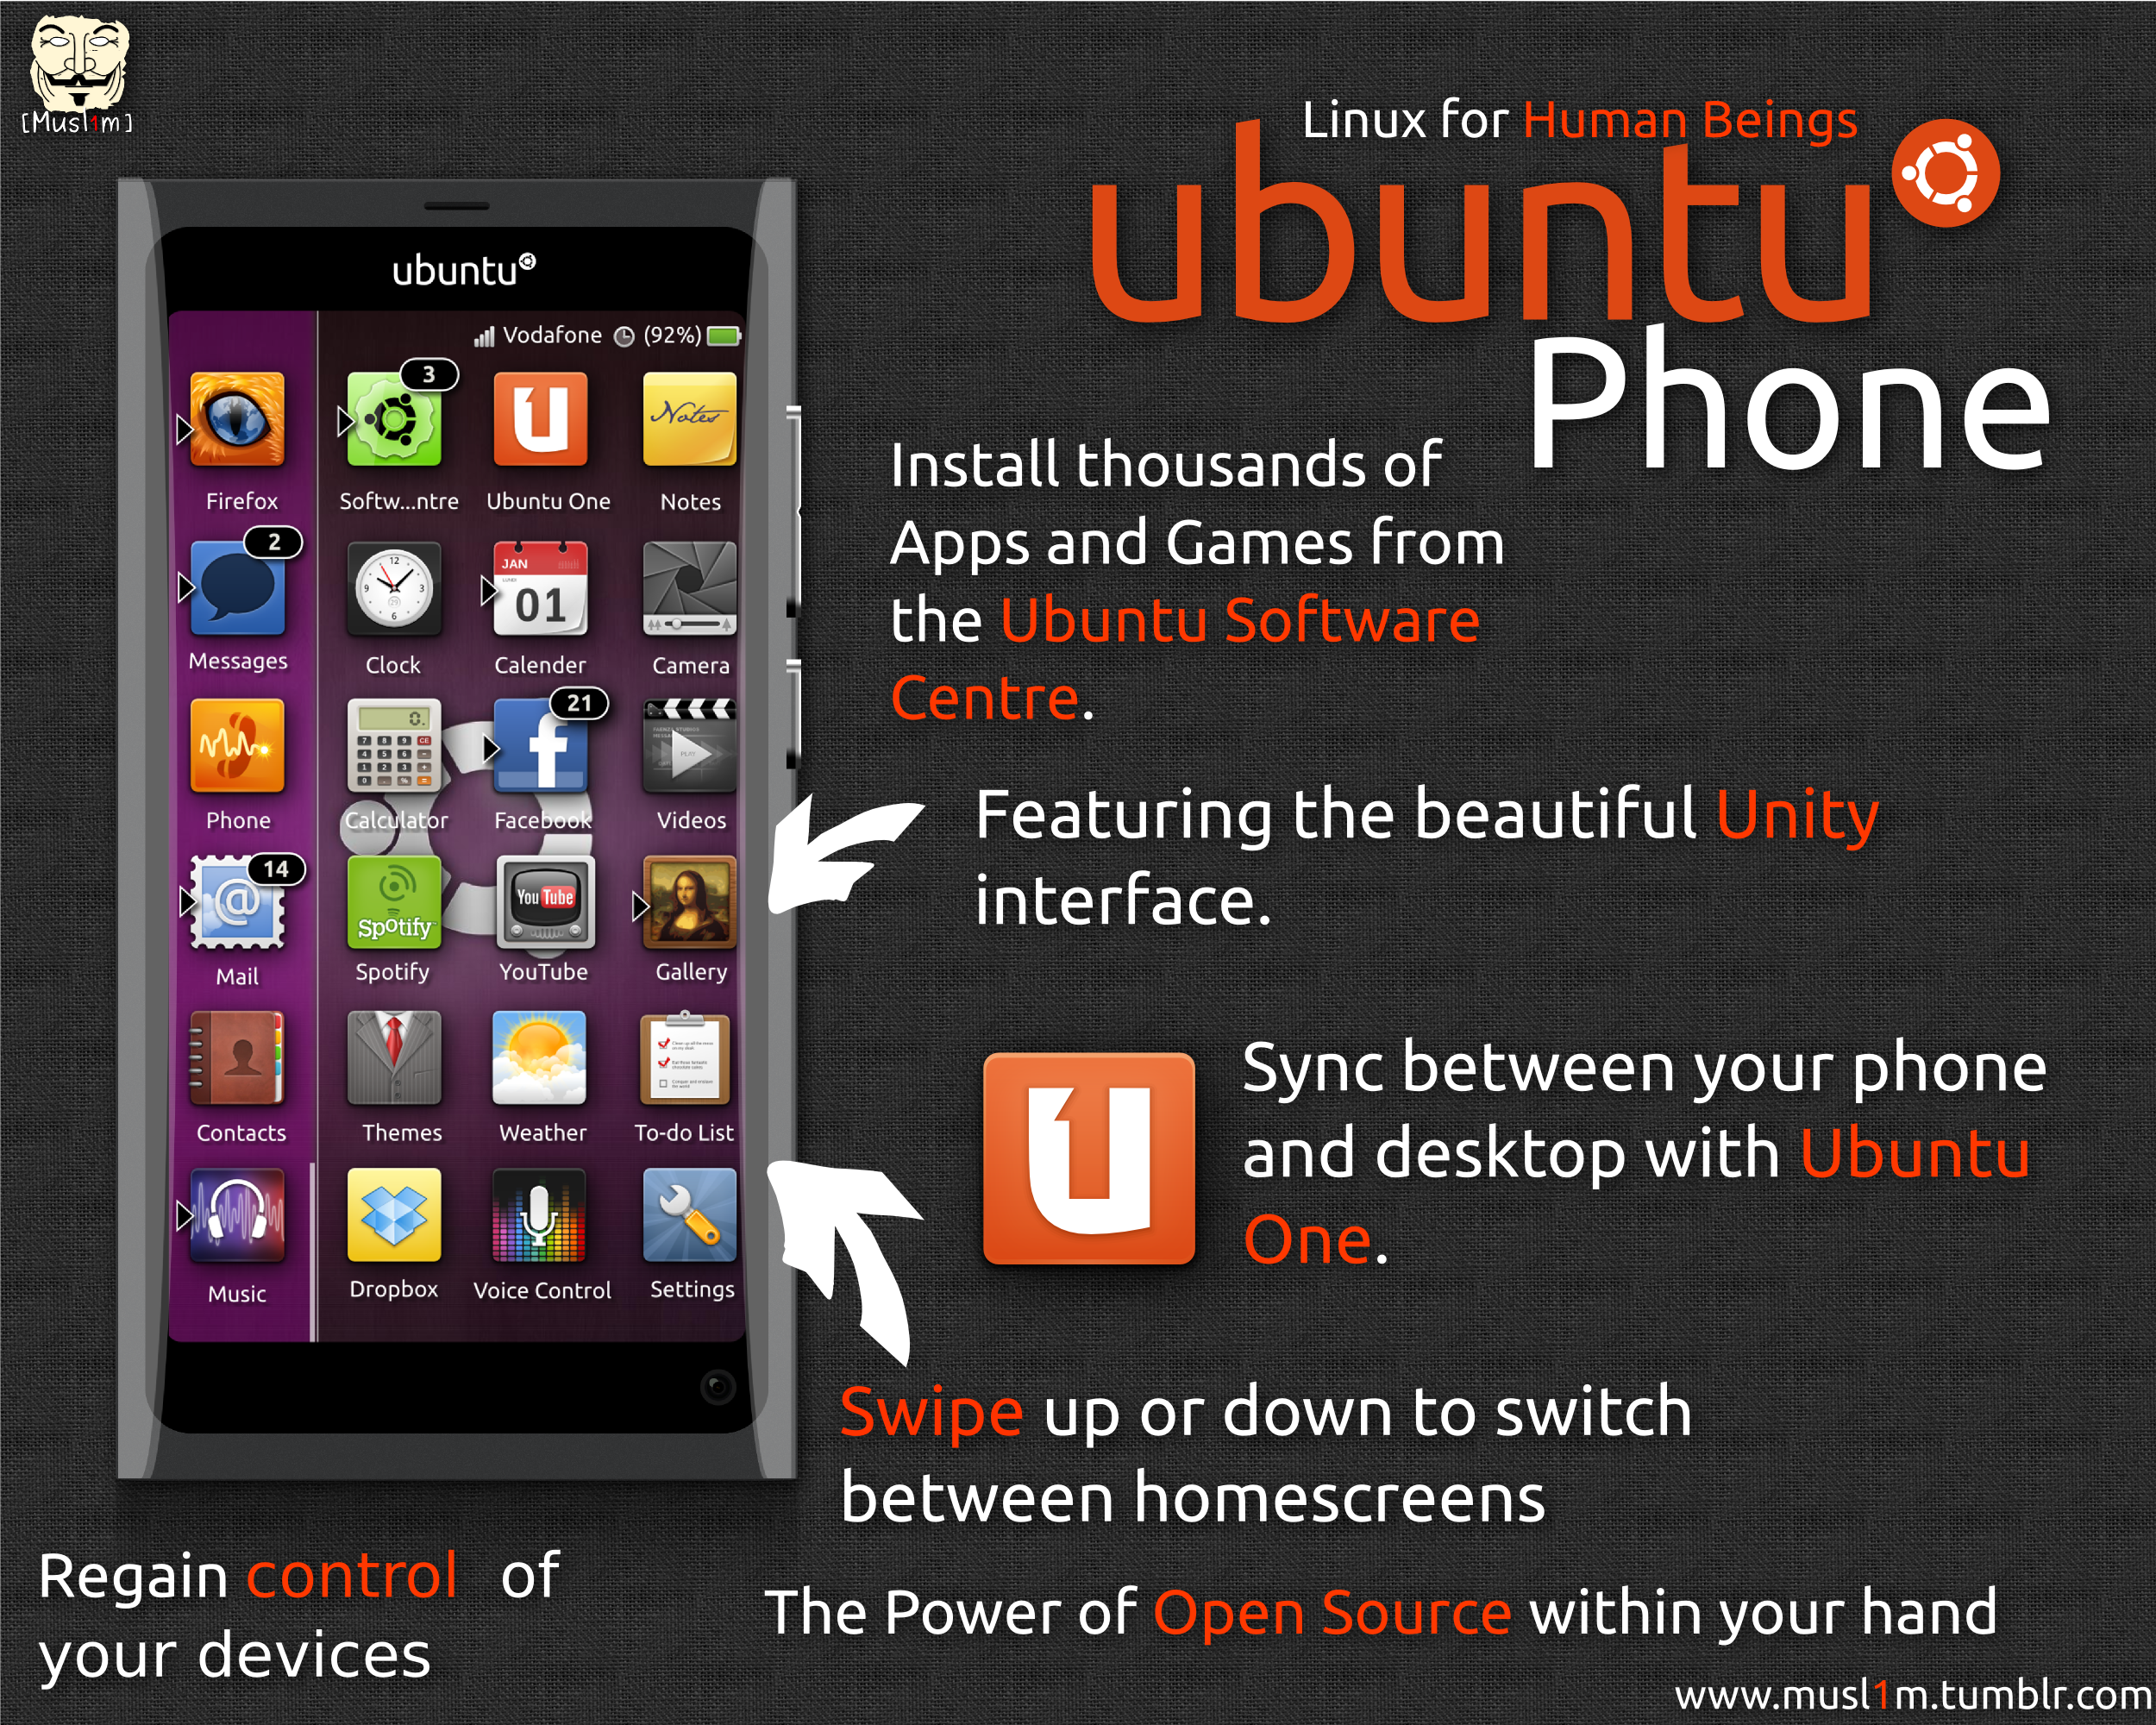 Ubuntu OS Phones to Ship In 2014